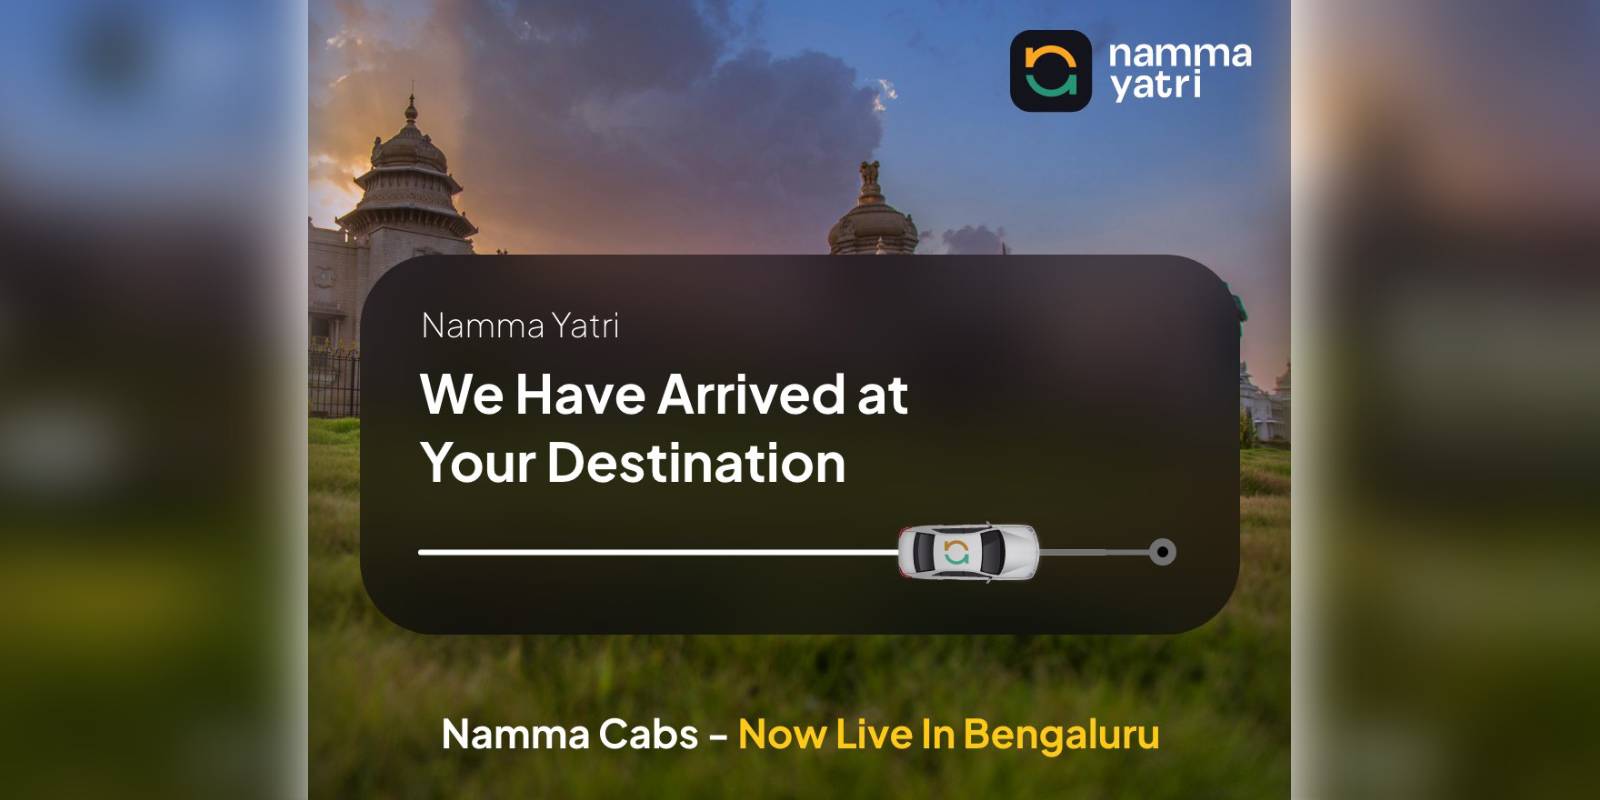 Namma Yatri cabs